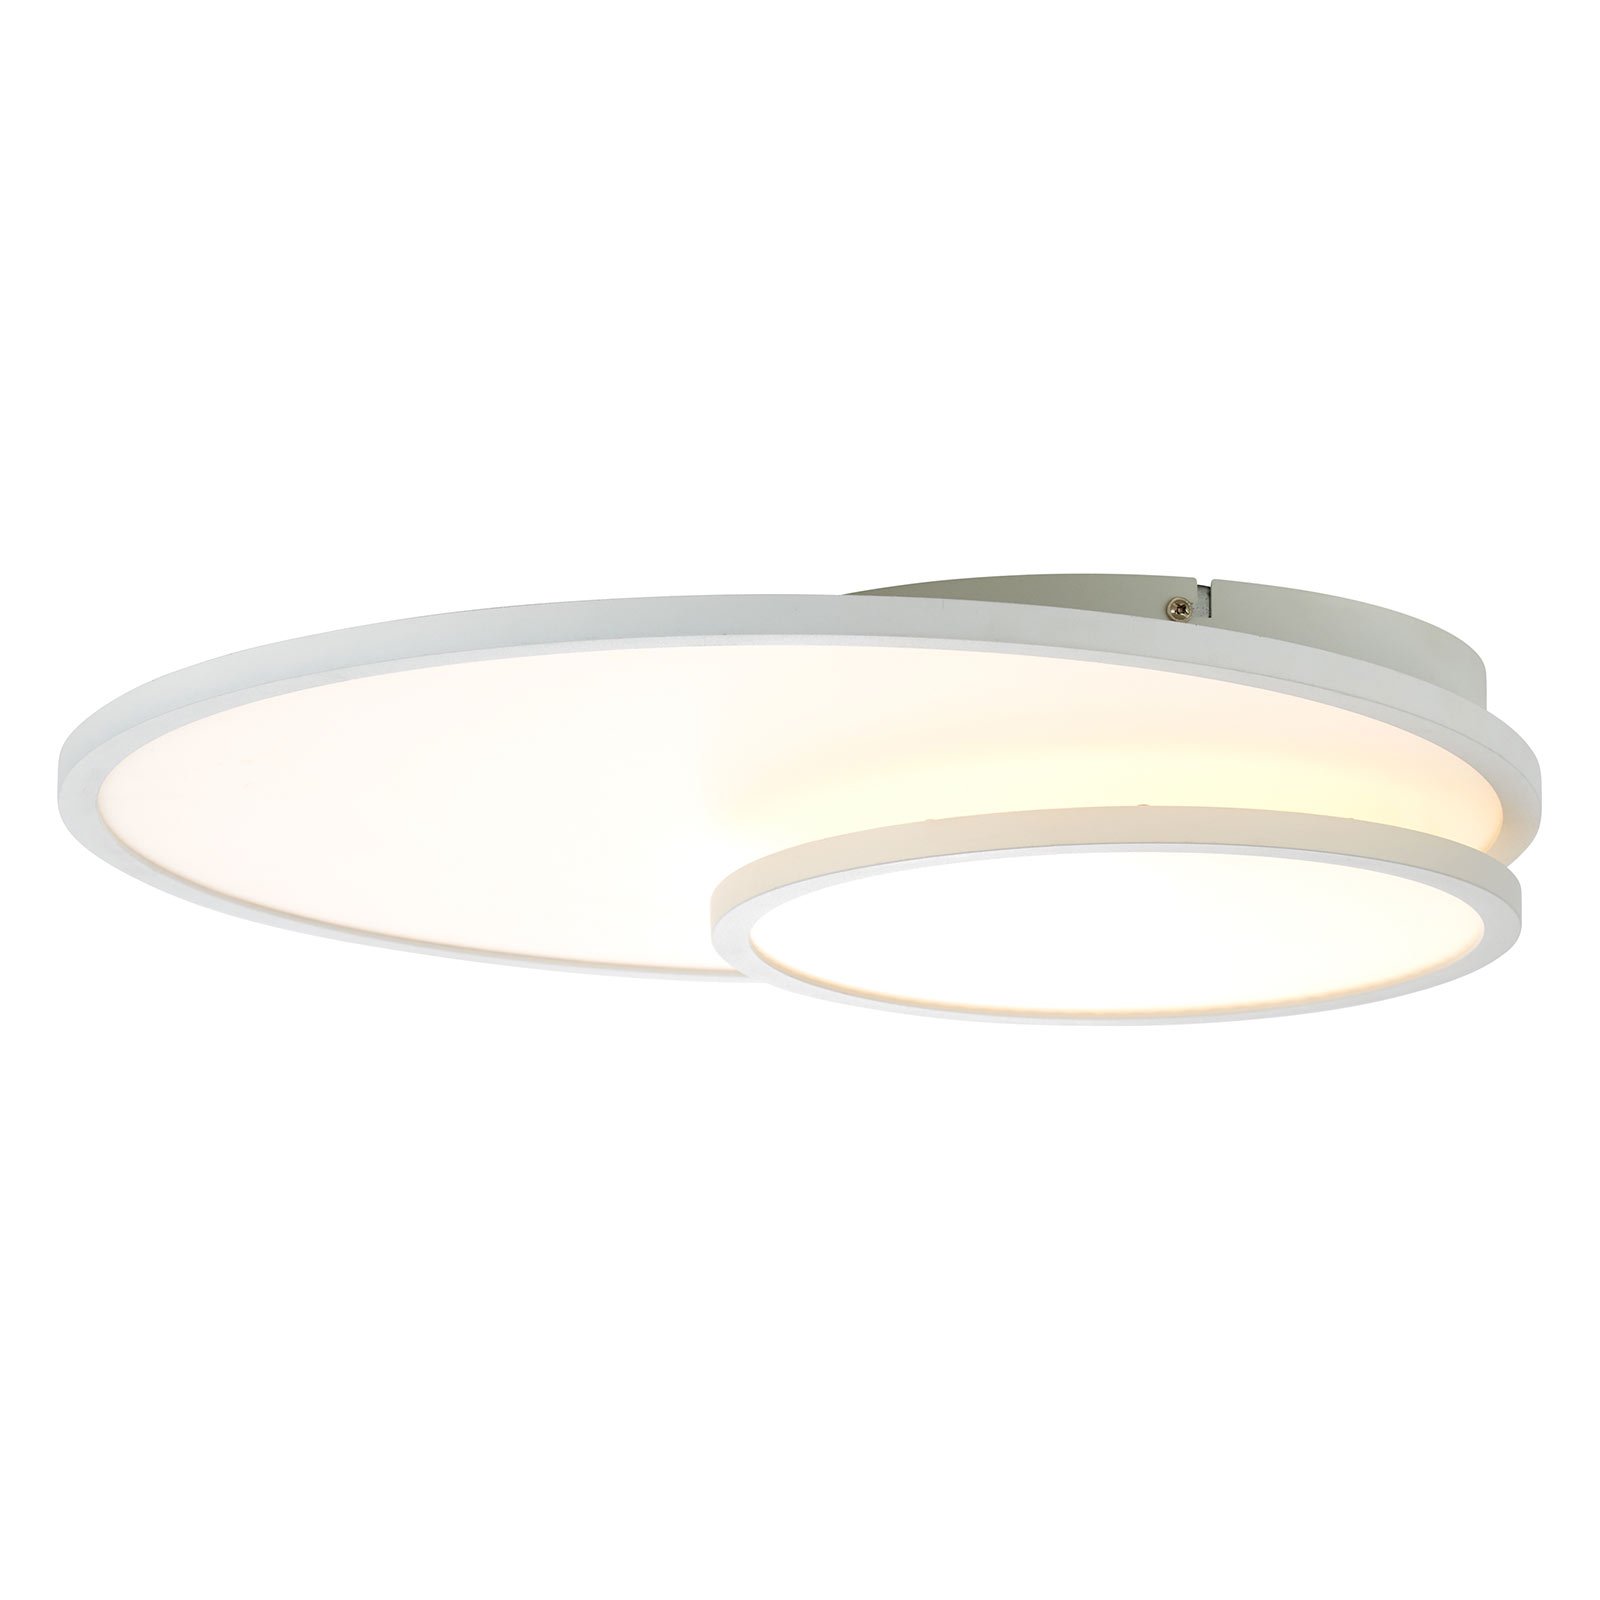 LED-taklampe Bility, rund, hvit ramme